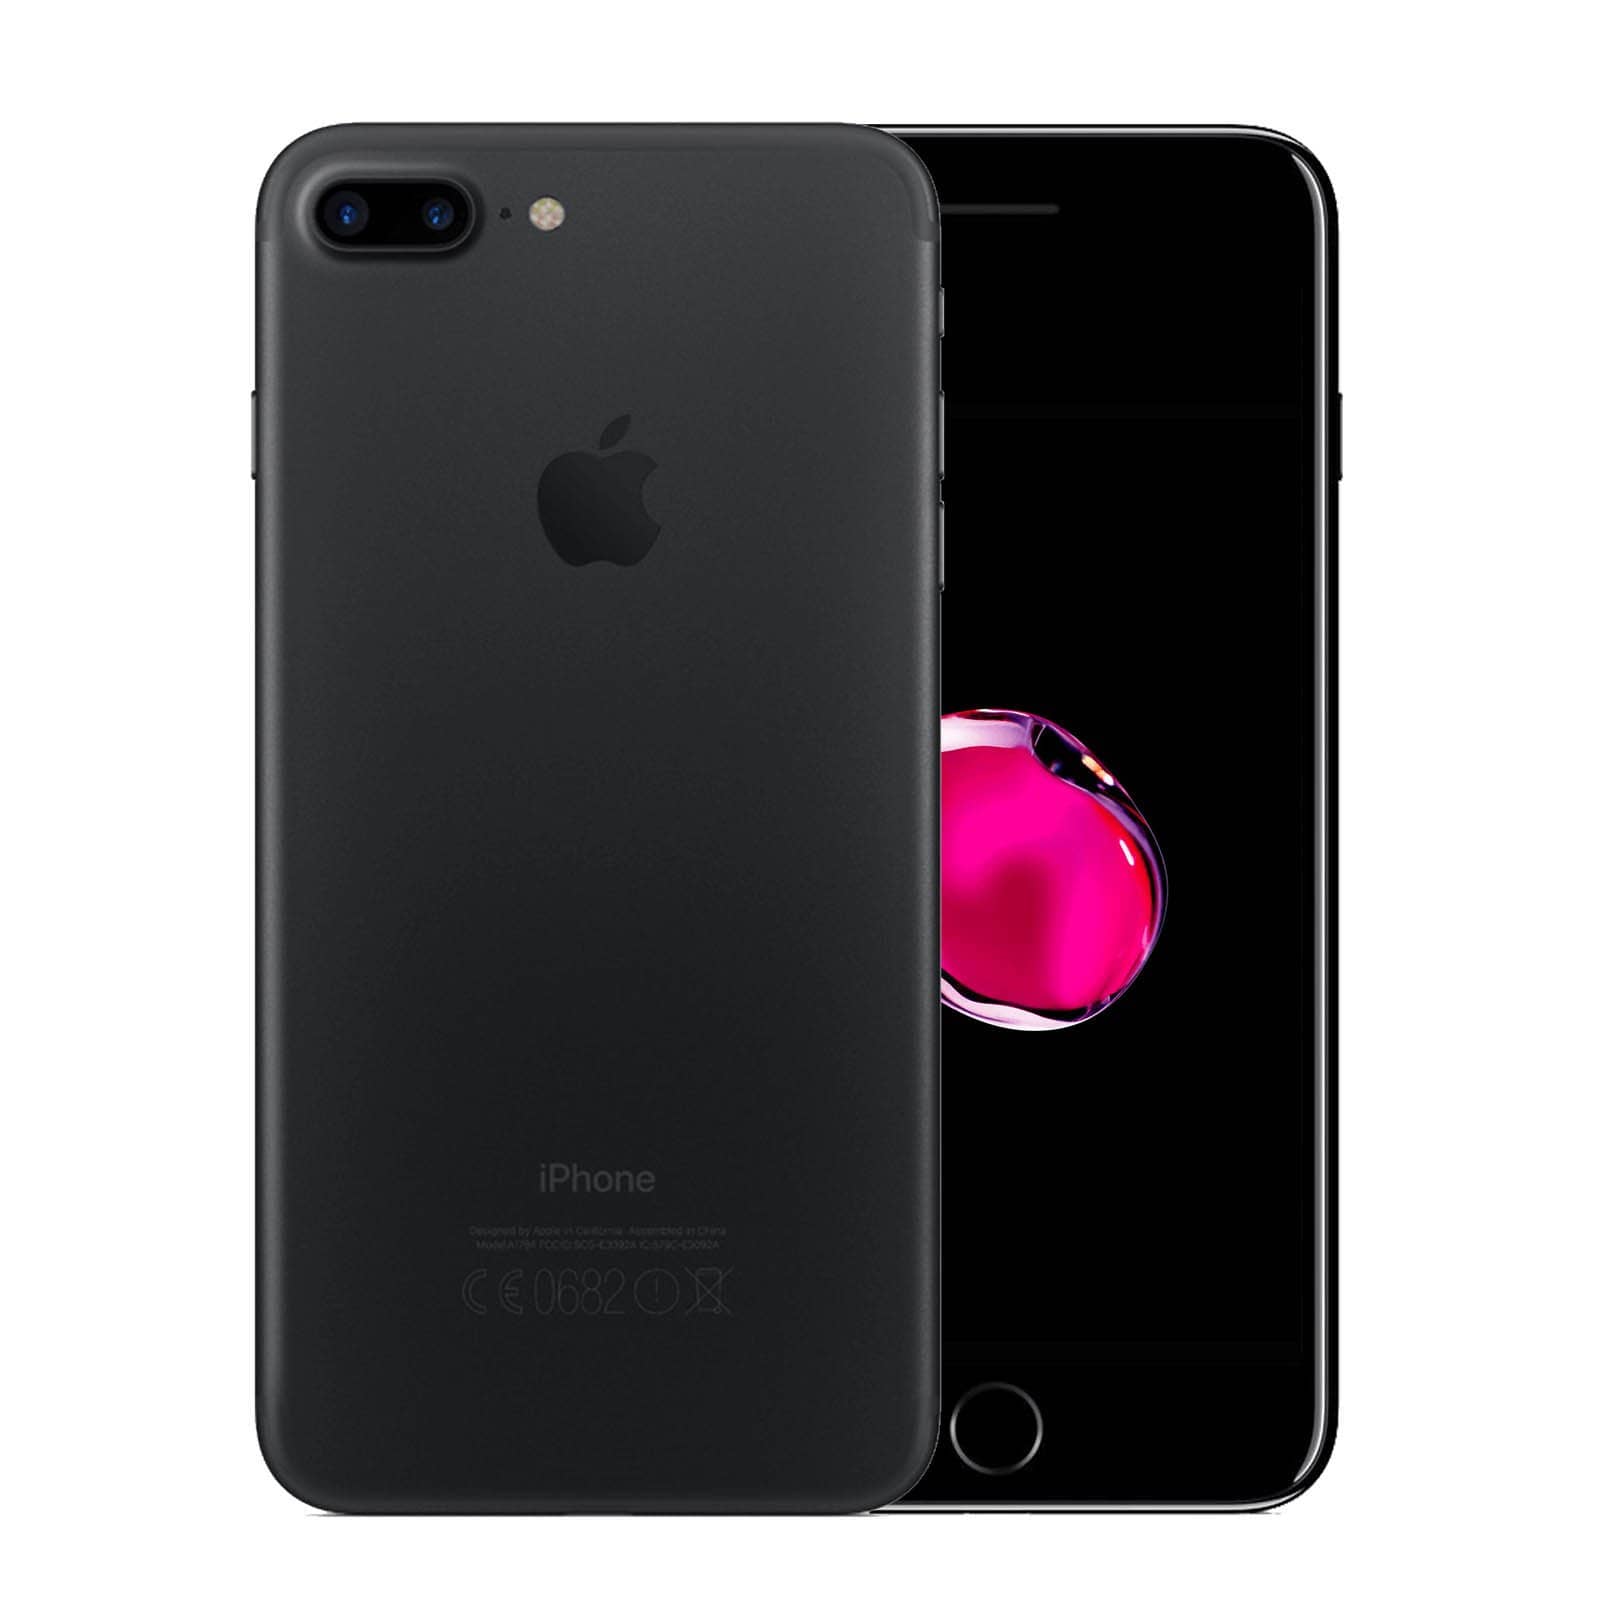 Apple iPhone 7 Plus 32GB Black Very Good - Unlocked 32GB Black Very Good